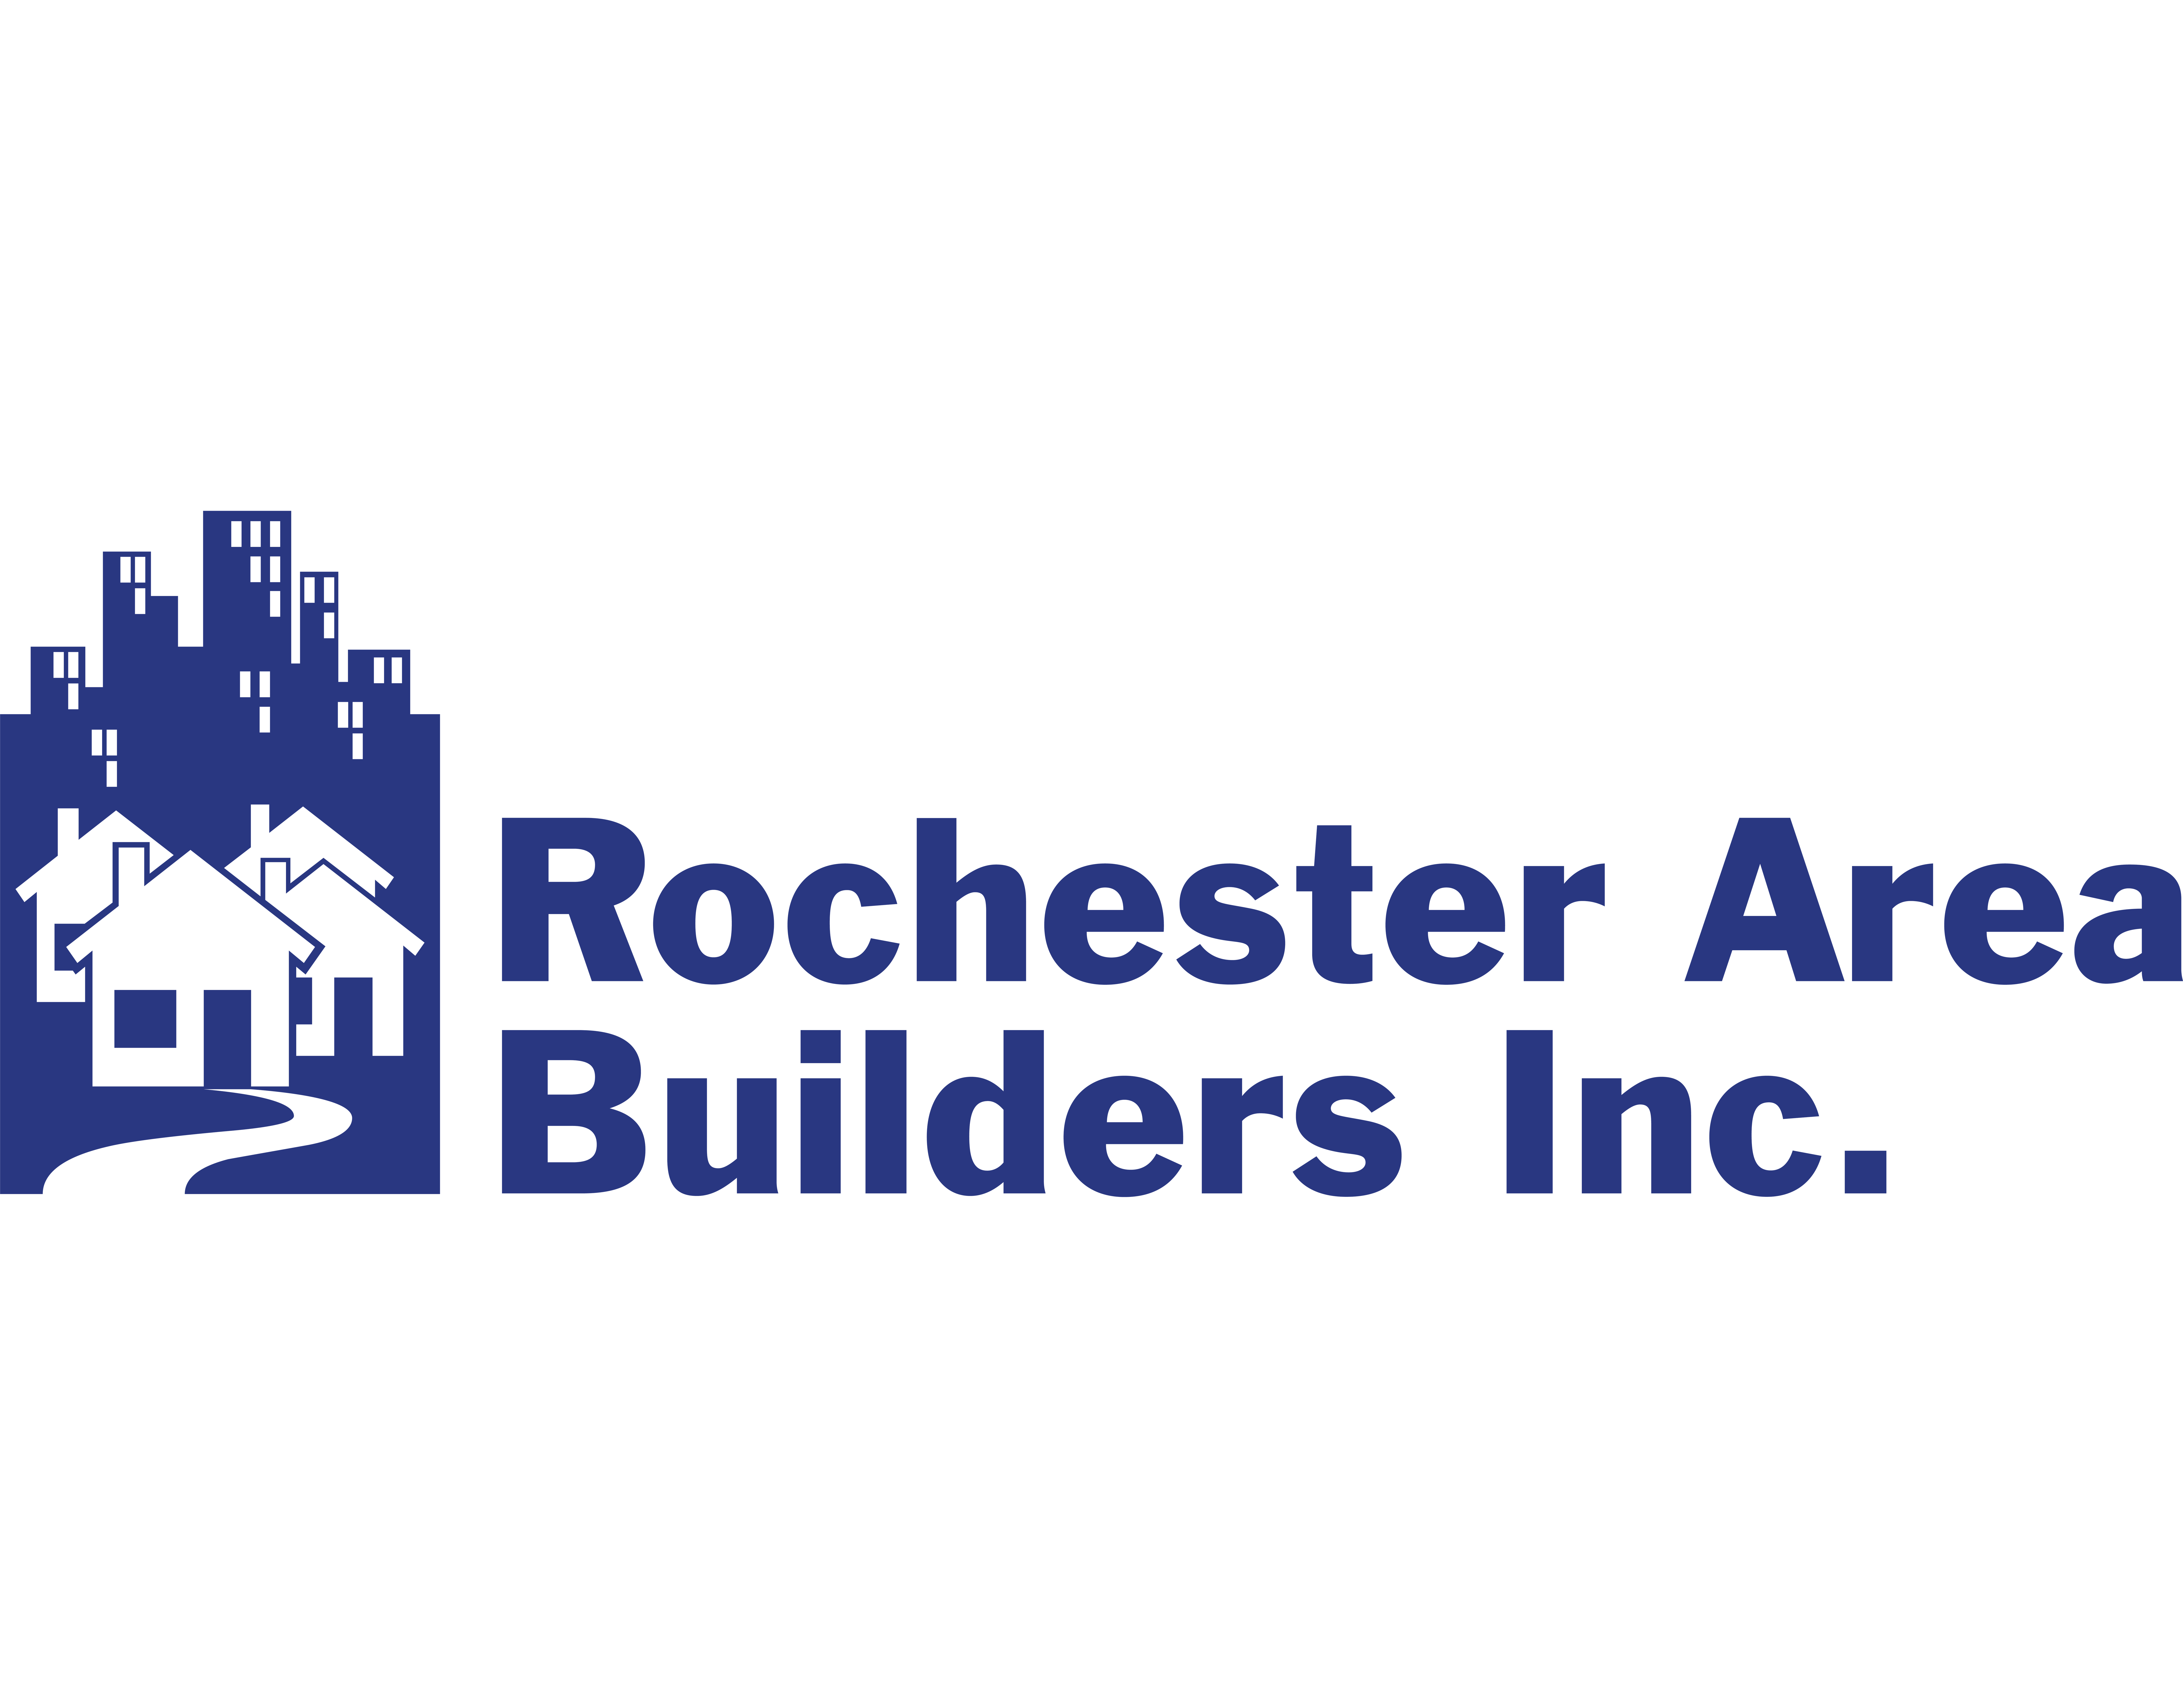 Rochester Area Builders